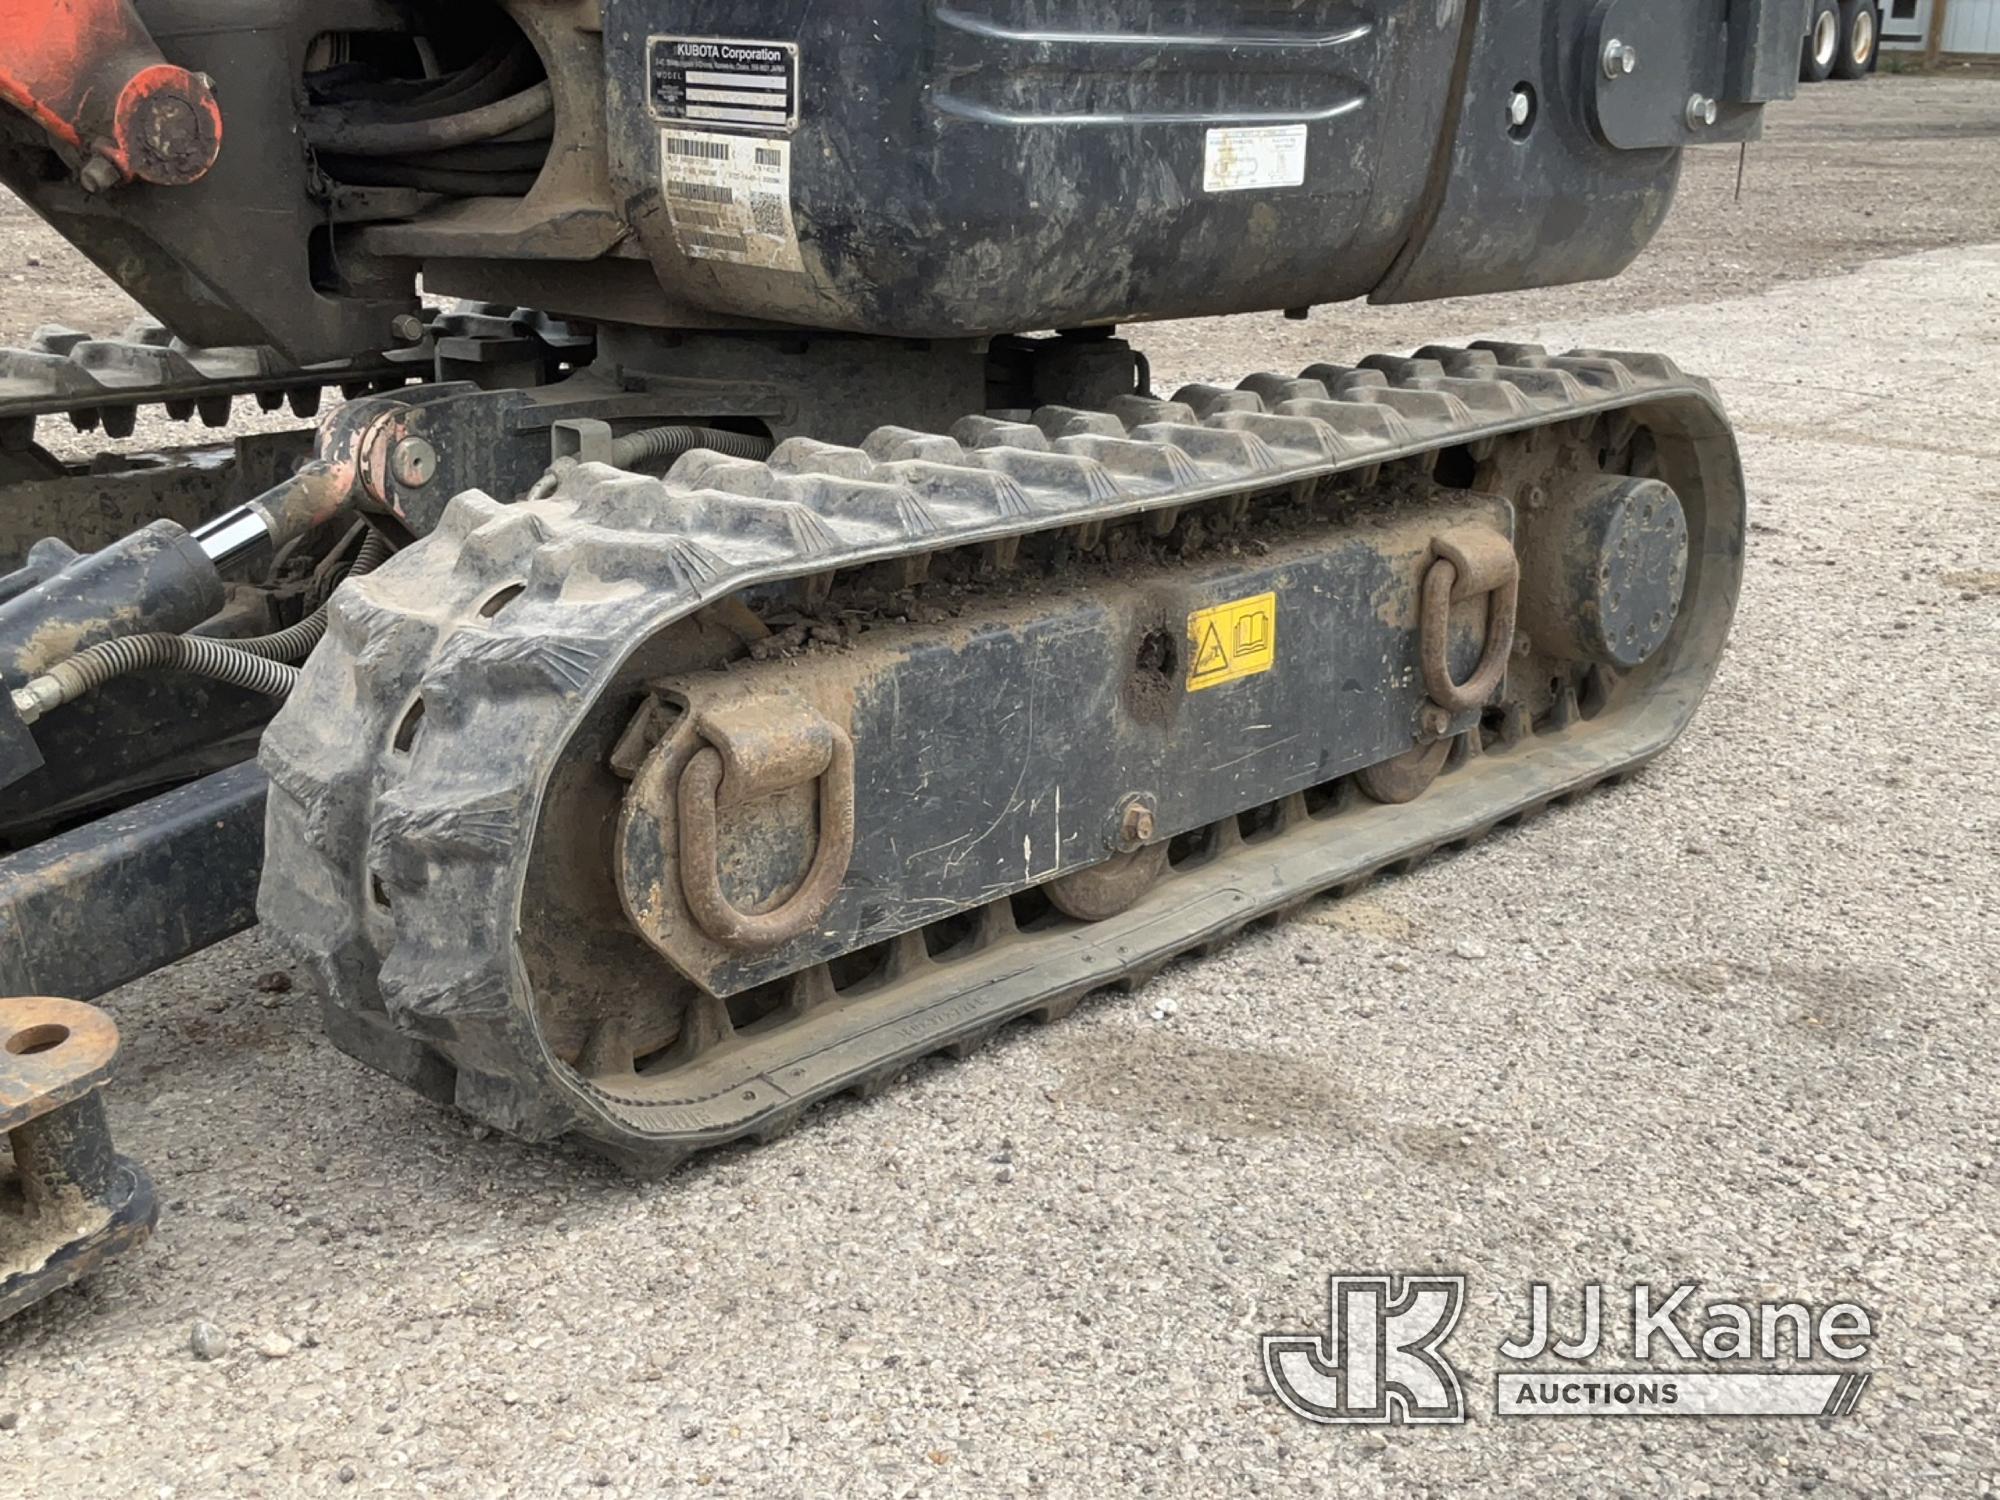 (South Beloit, IL) 2019 Kubota K-008 Mini Hydraulic Excavator Runs, Moves, Operates) (Smokes) (Selle